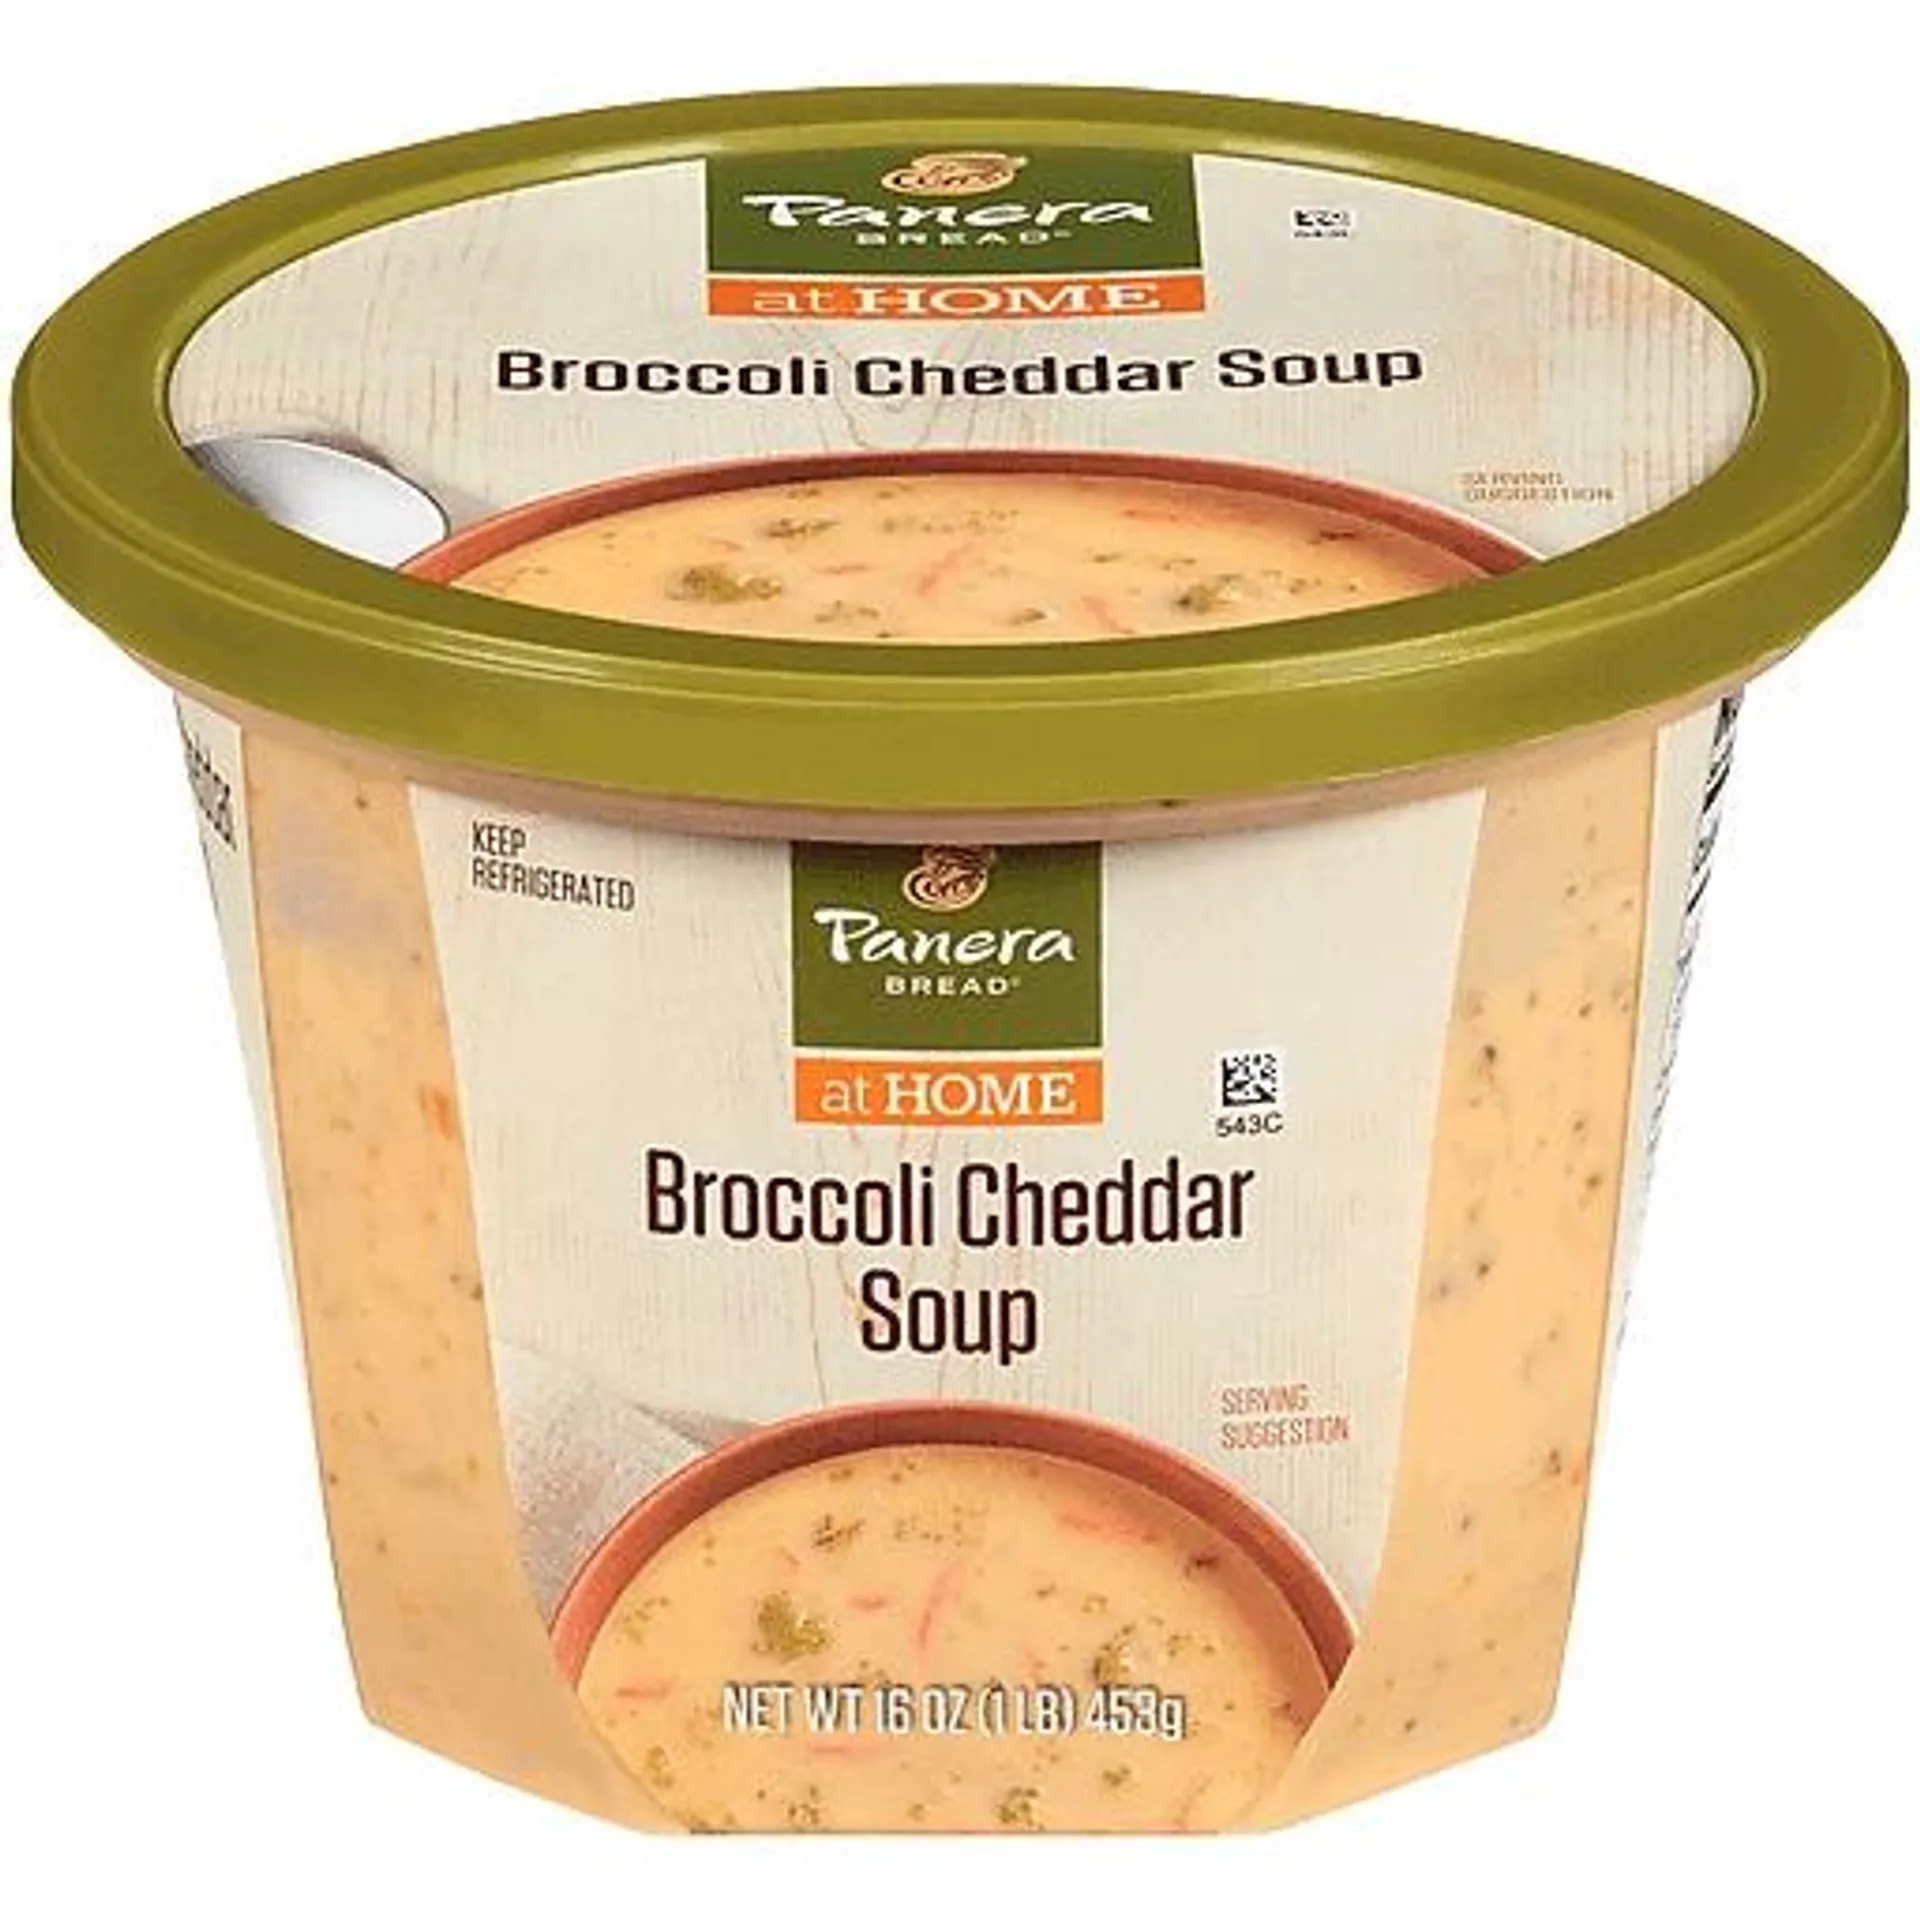 Panera Bread Broccoli Cheddar Soup, 16 OZ Soup Cup